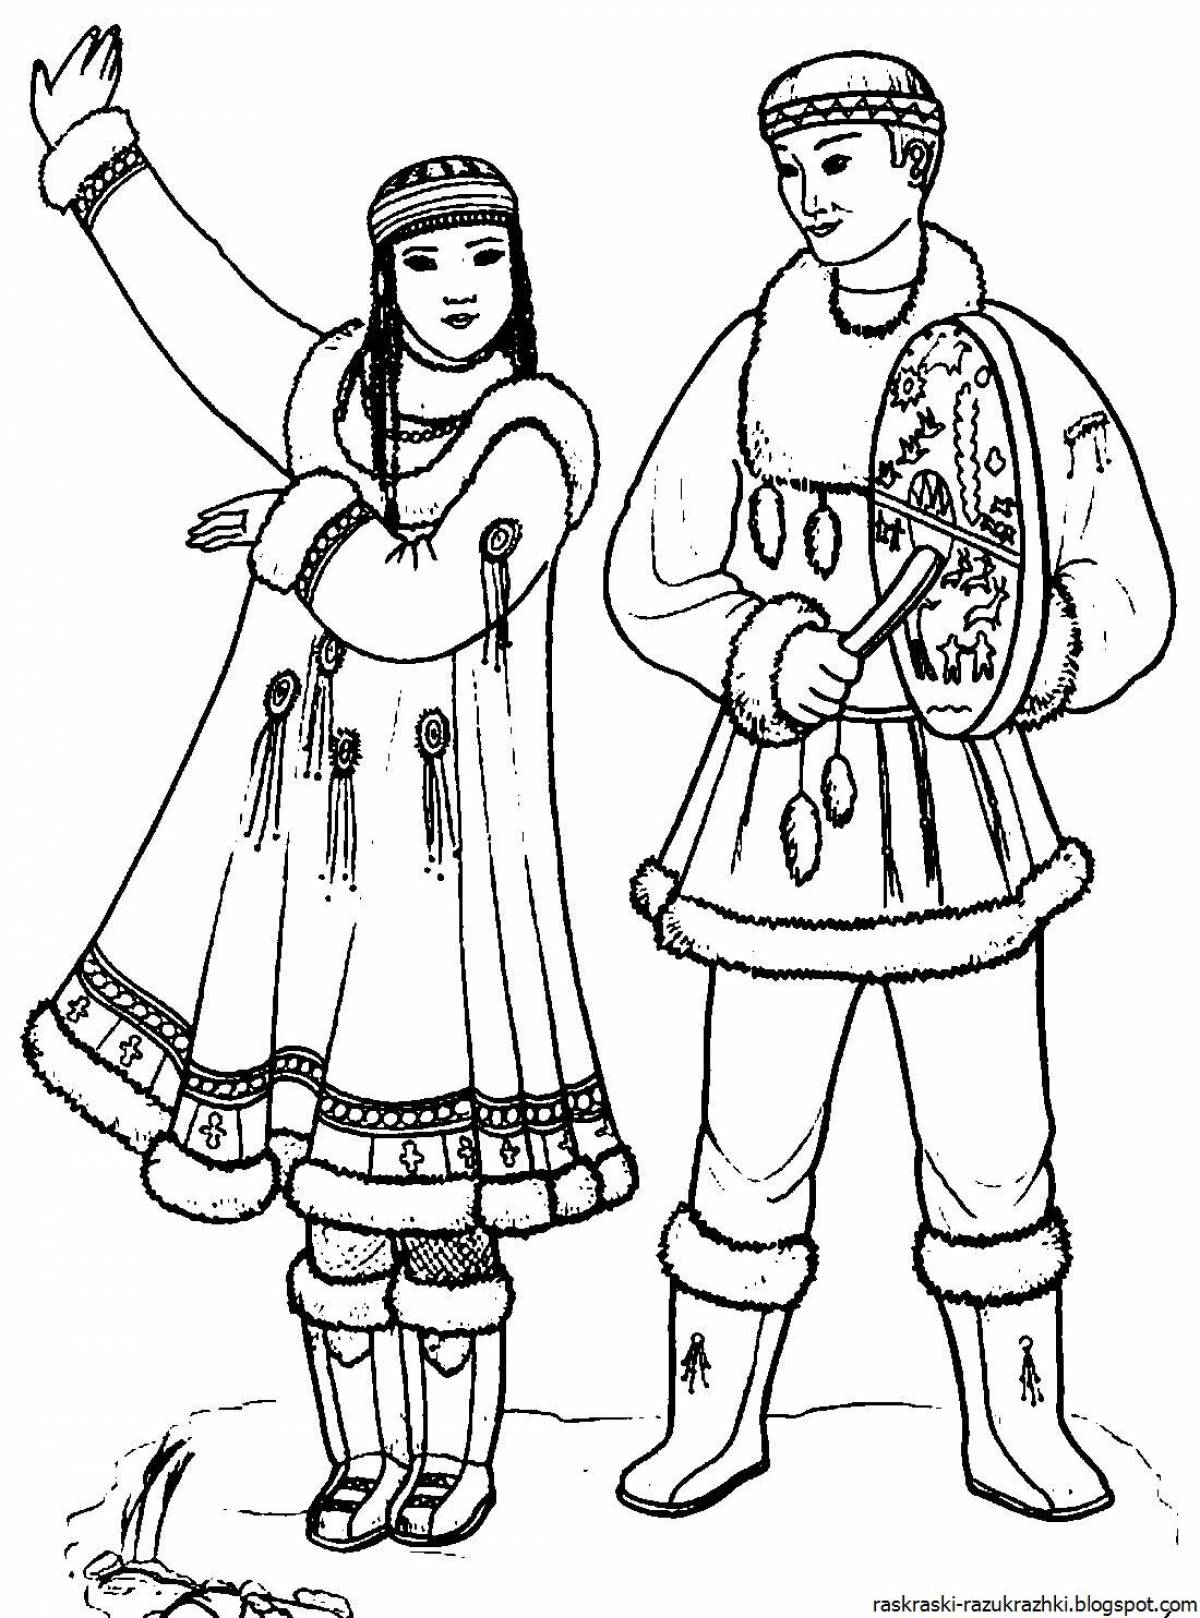 Fascinating Chukchi national costume coloring book